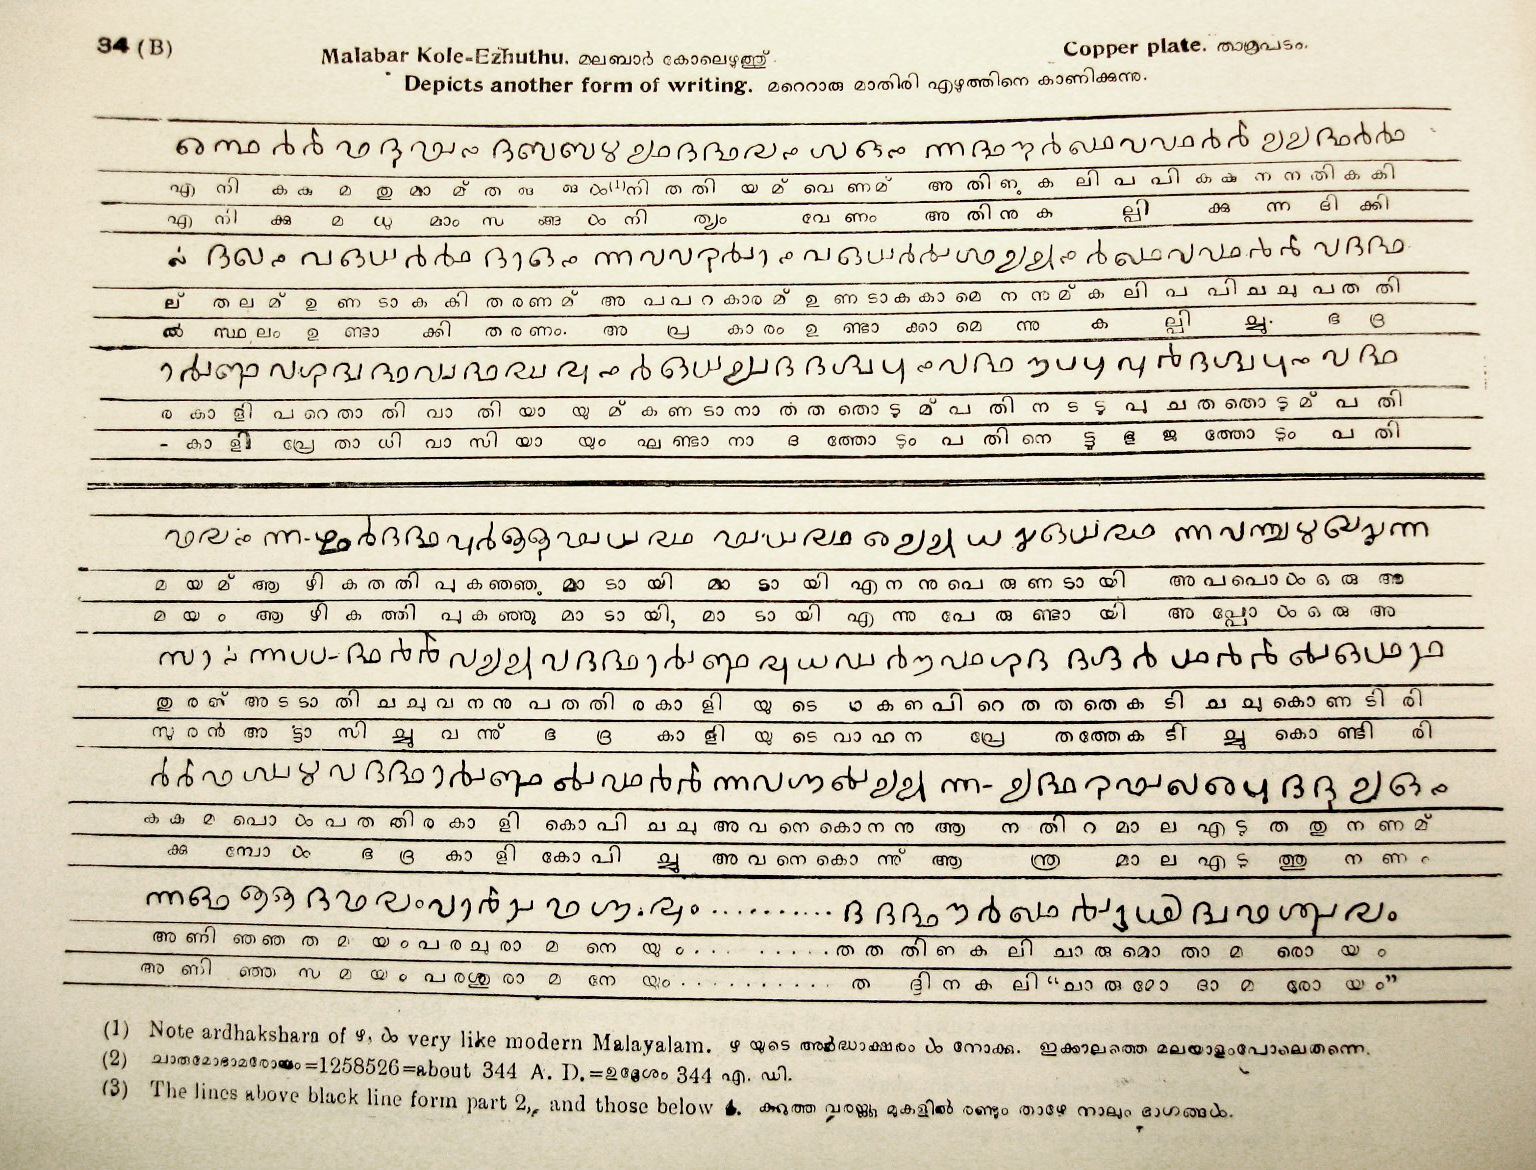 Kole-Ezhuthu manuscript